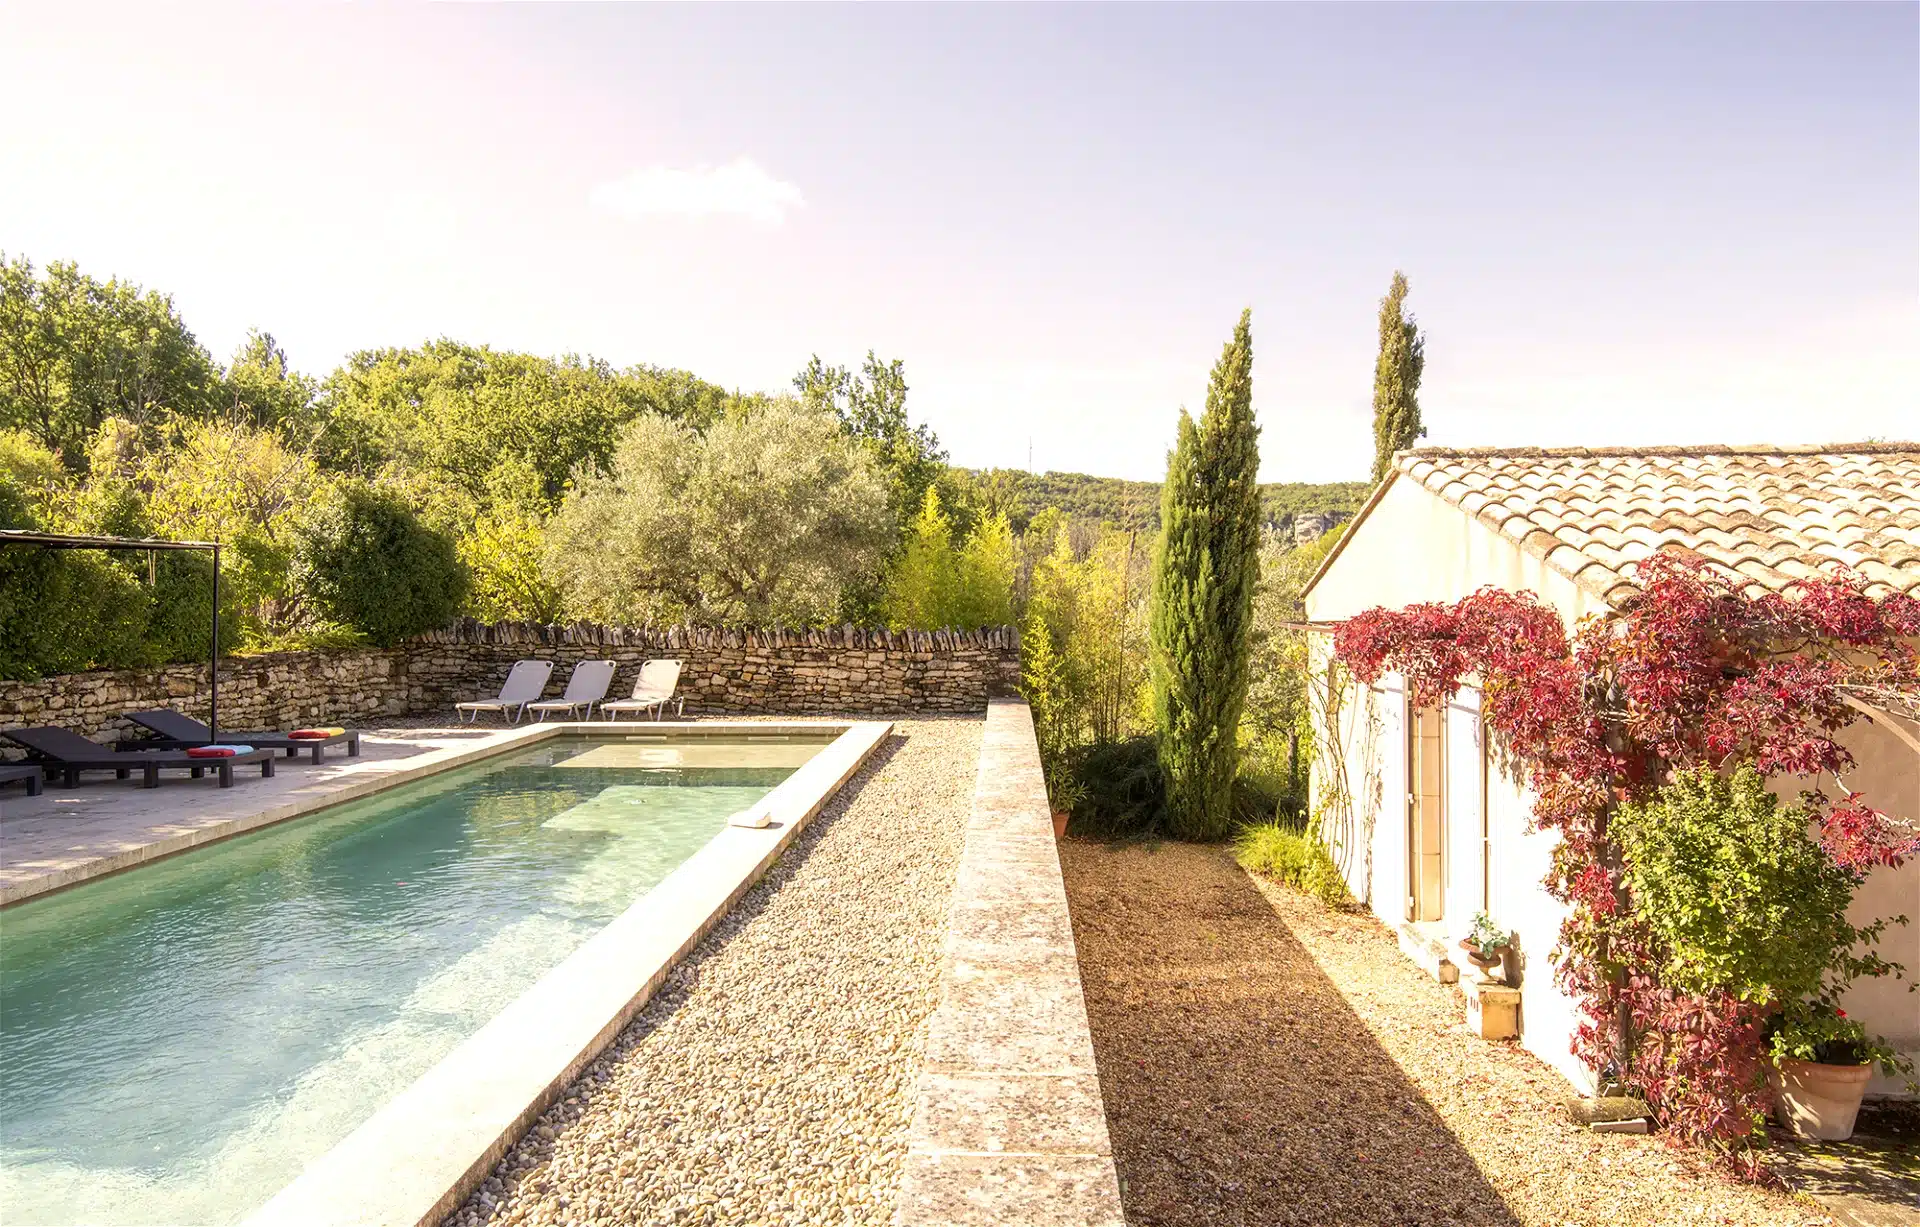 Provence luxury villa villa pool, fundraiser auction items, live auction items